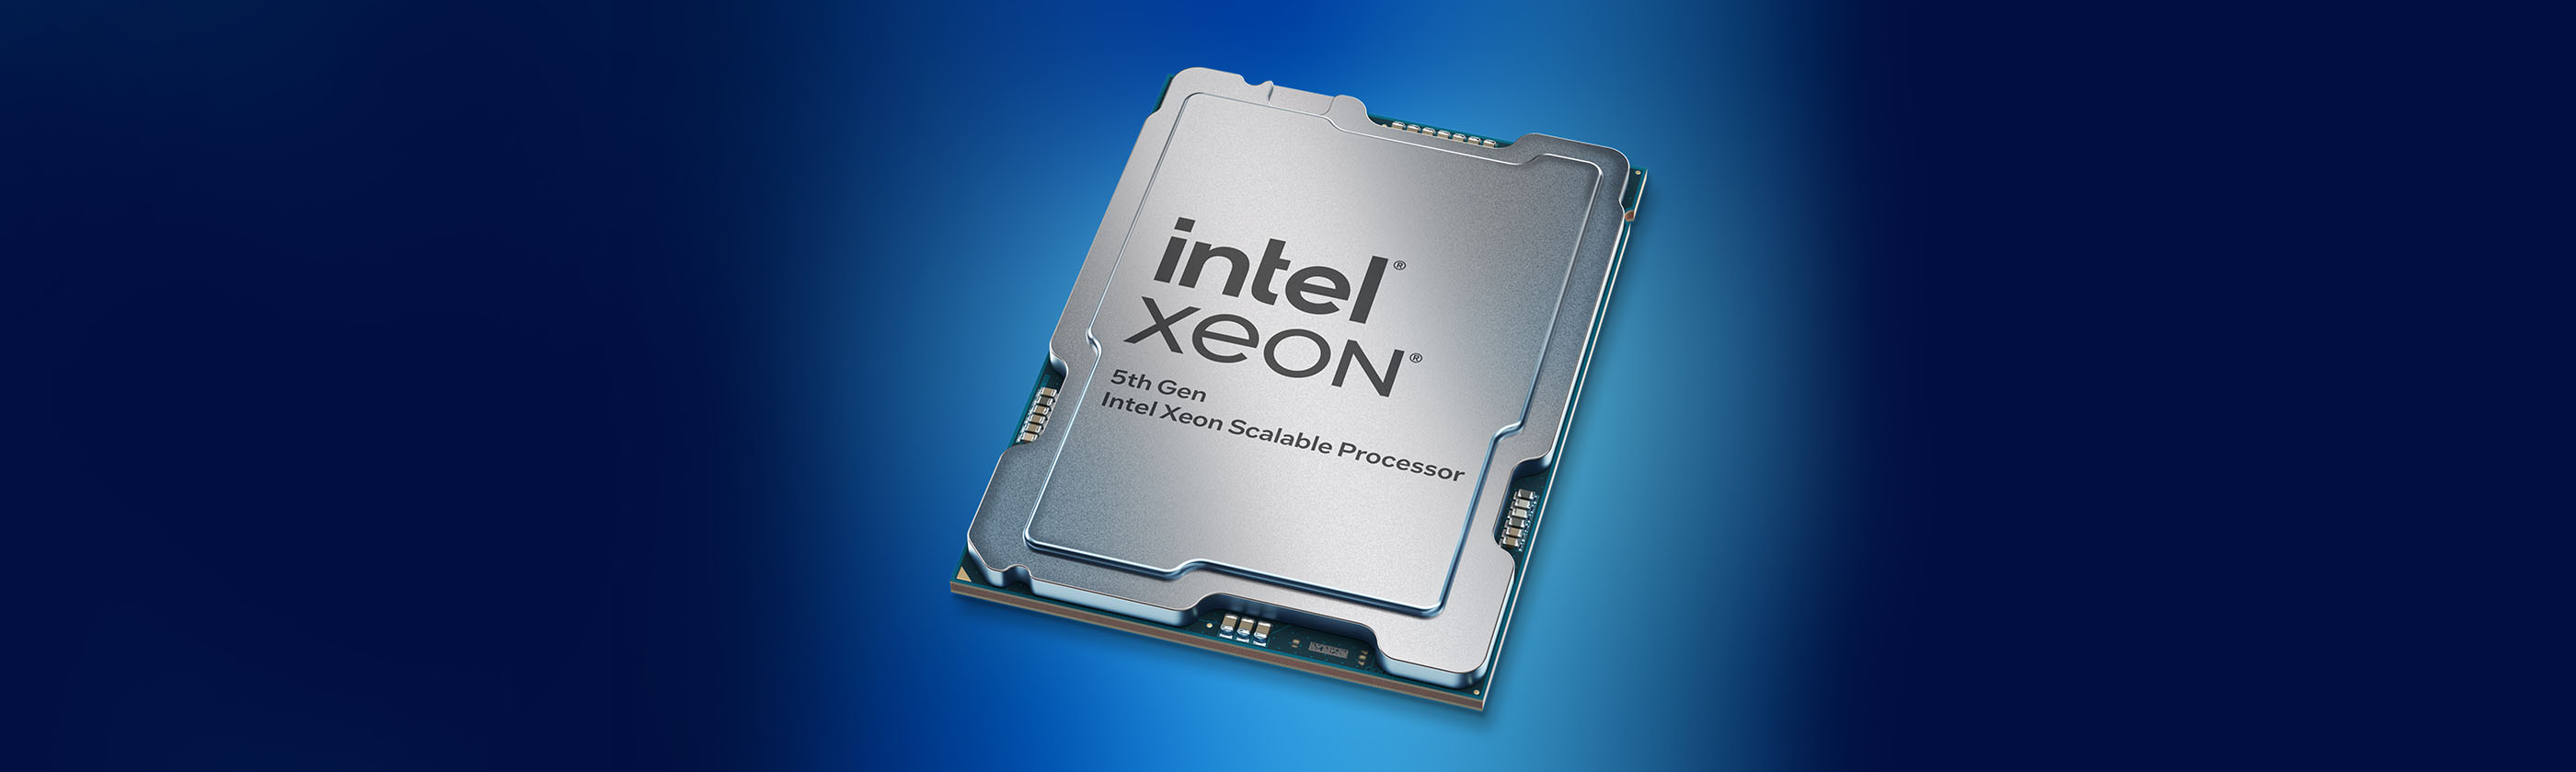 Intel_Xeon_processor_2800x839.jpg